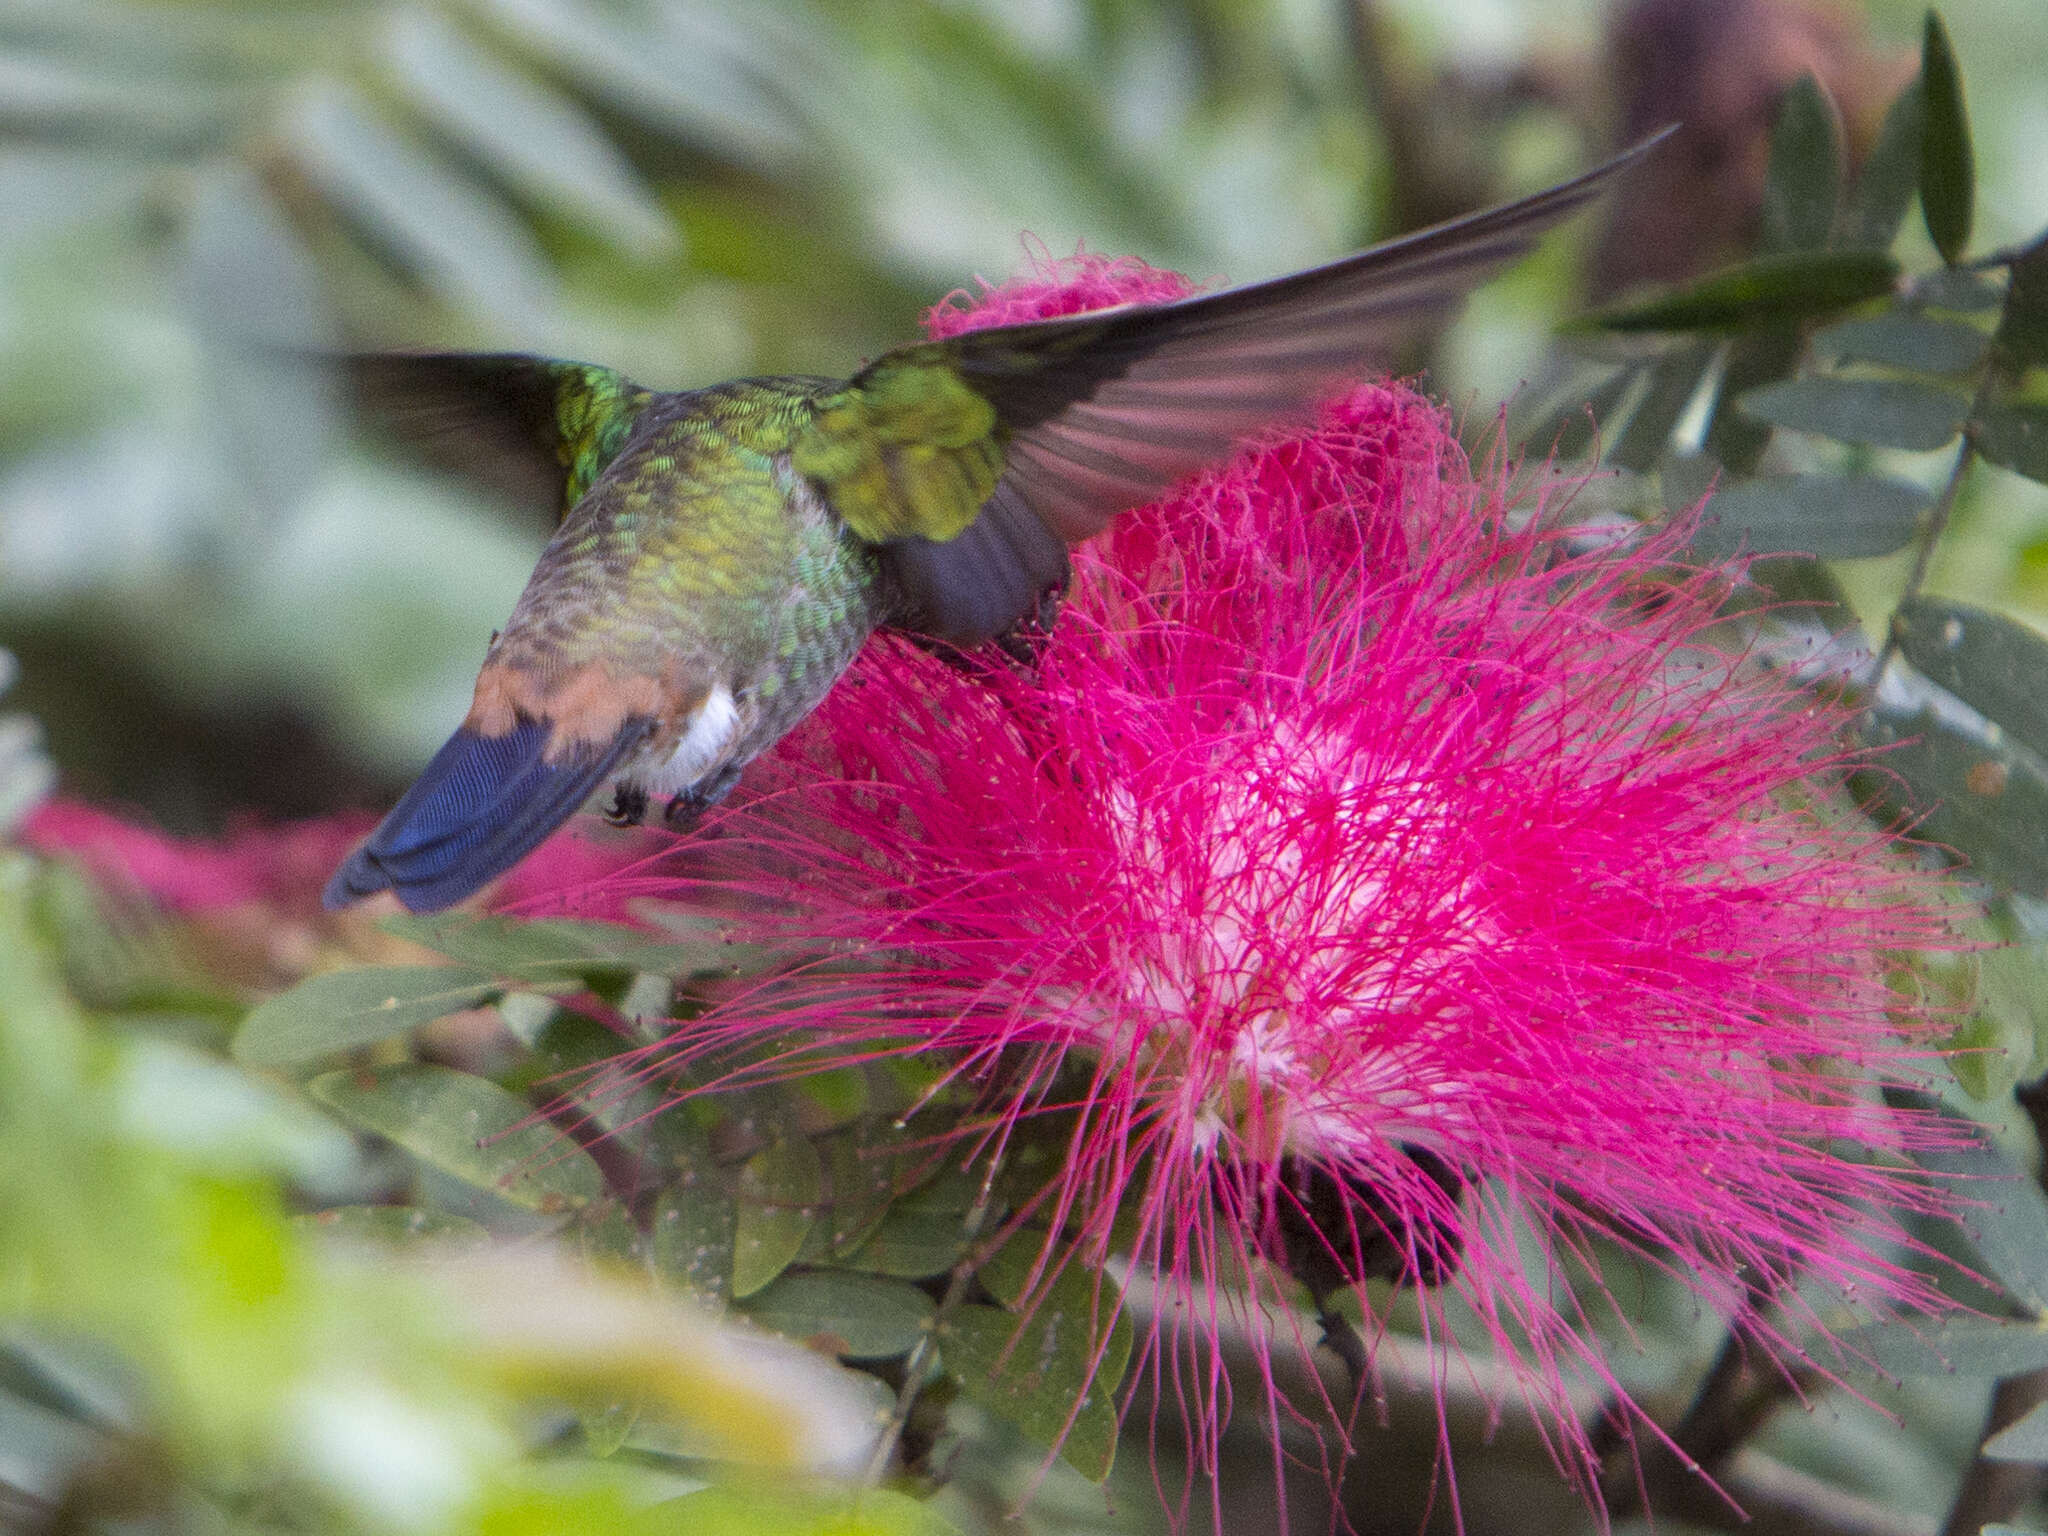 Image of Copper-rumped Hummingbird